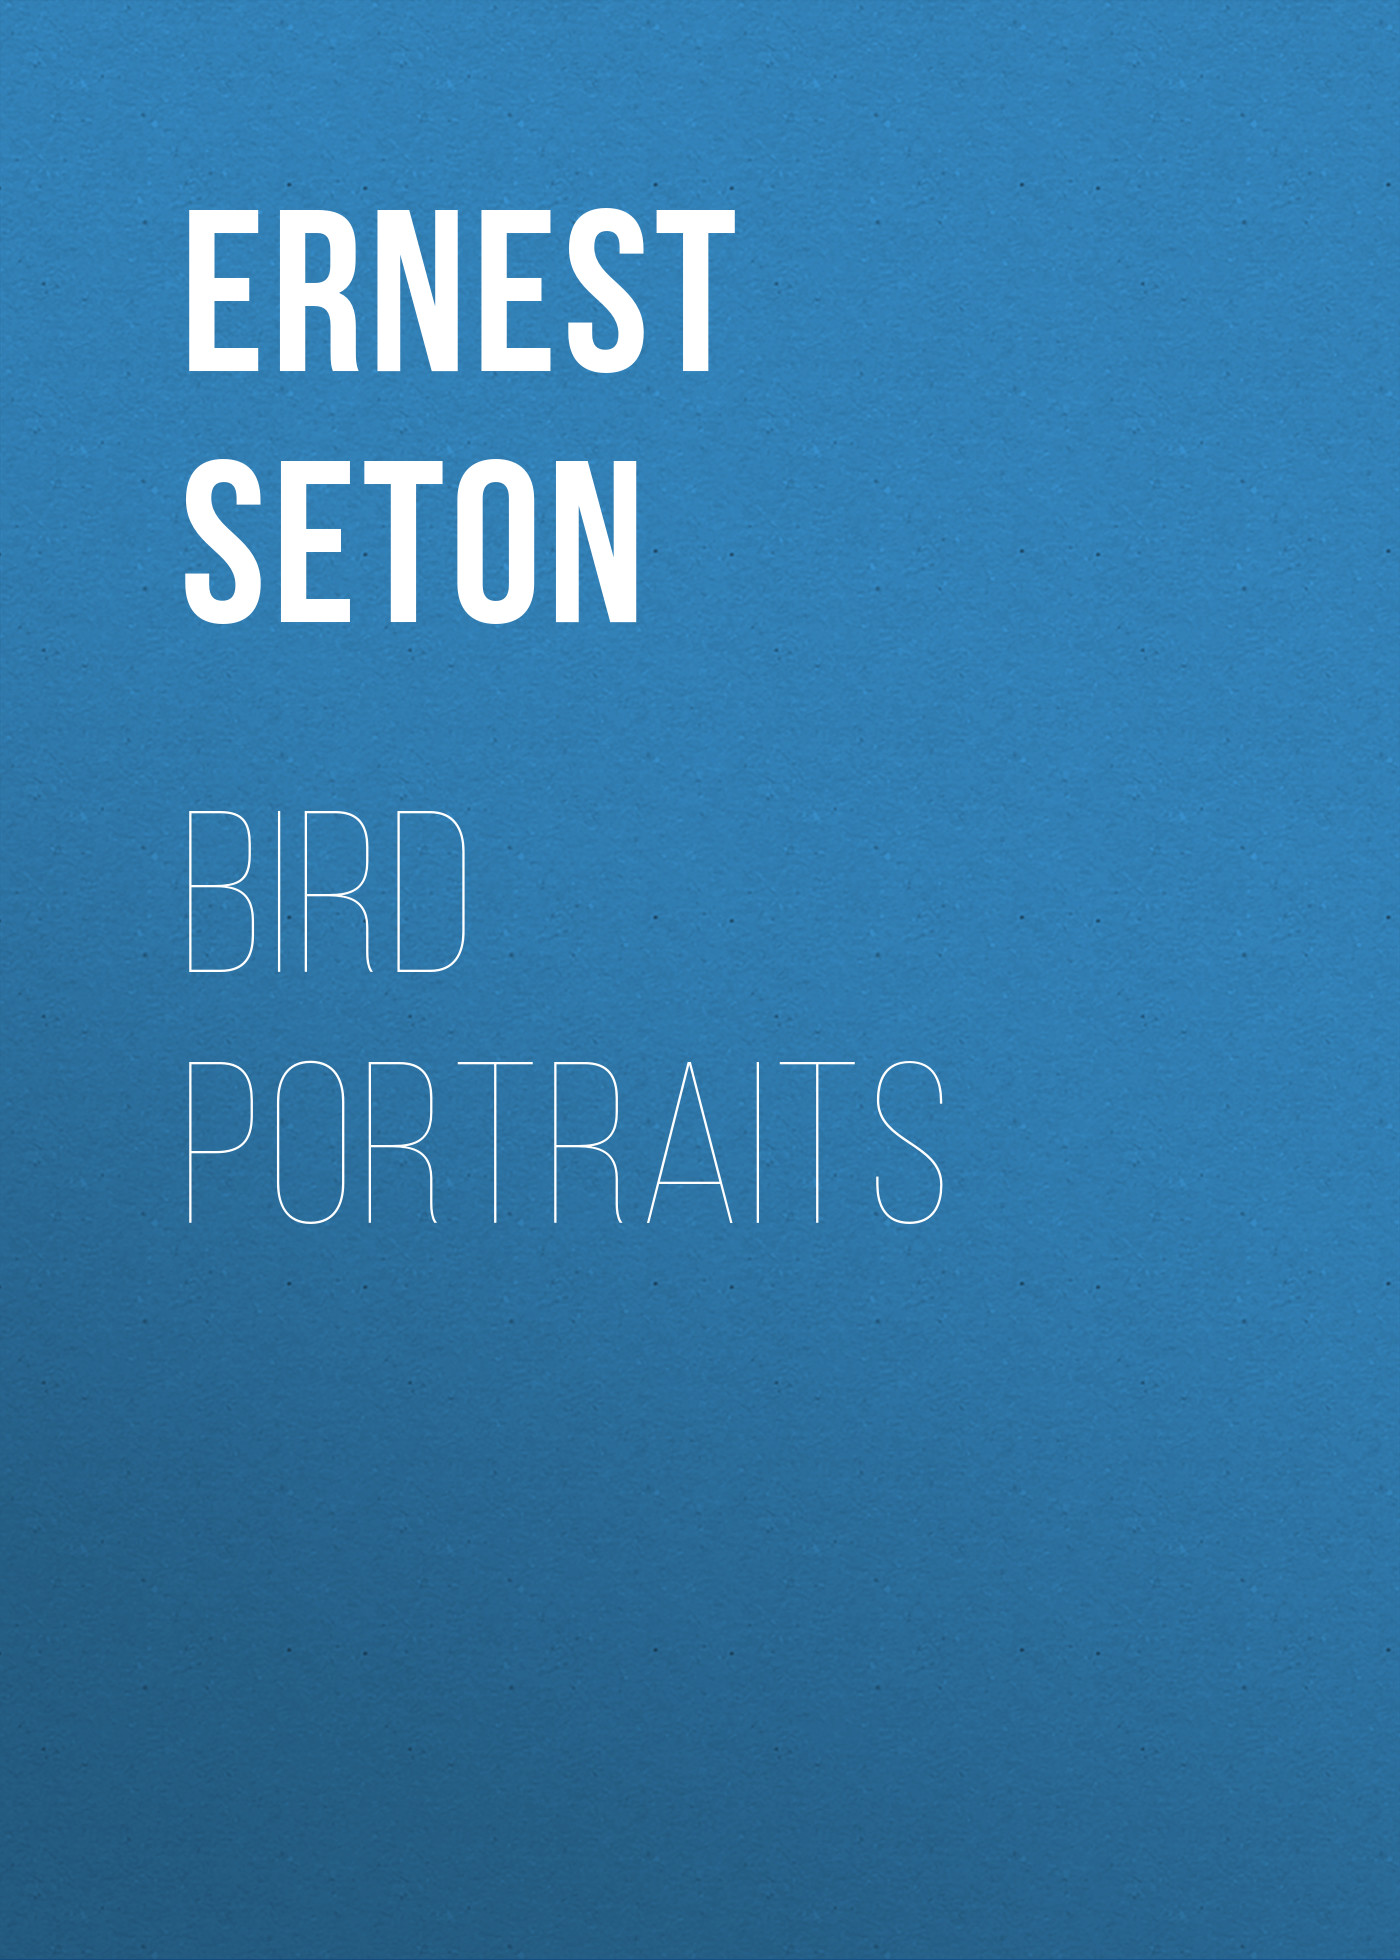 Bird Portraits